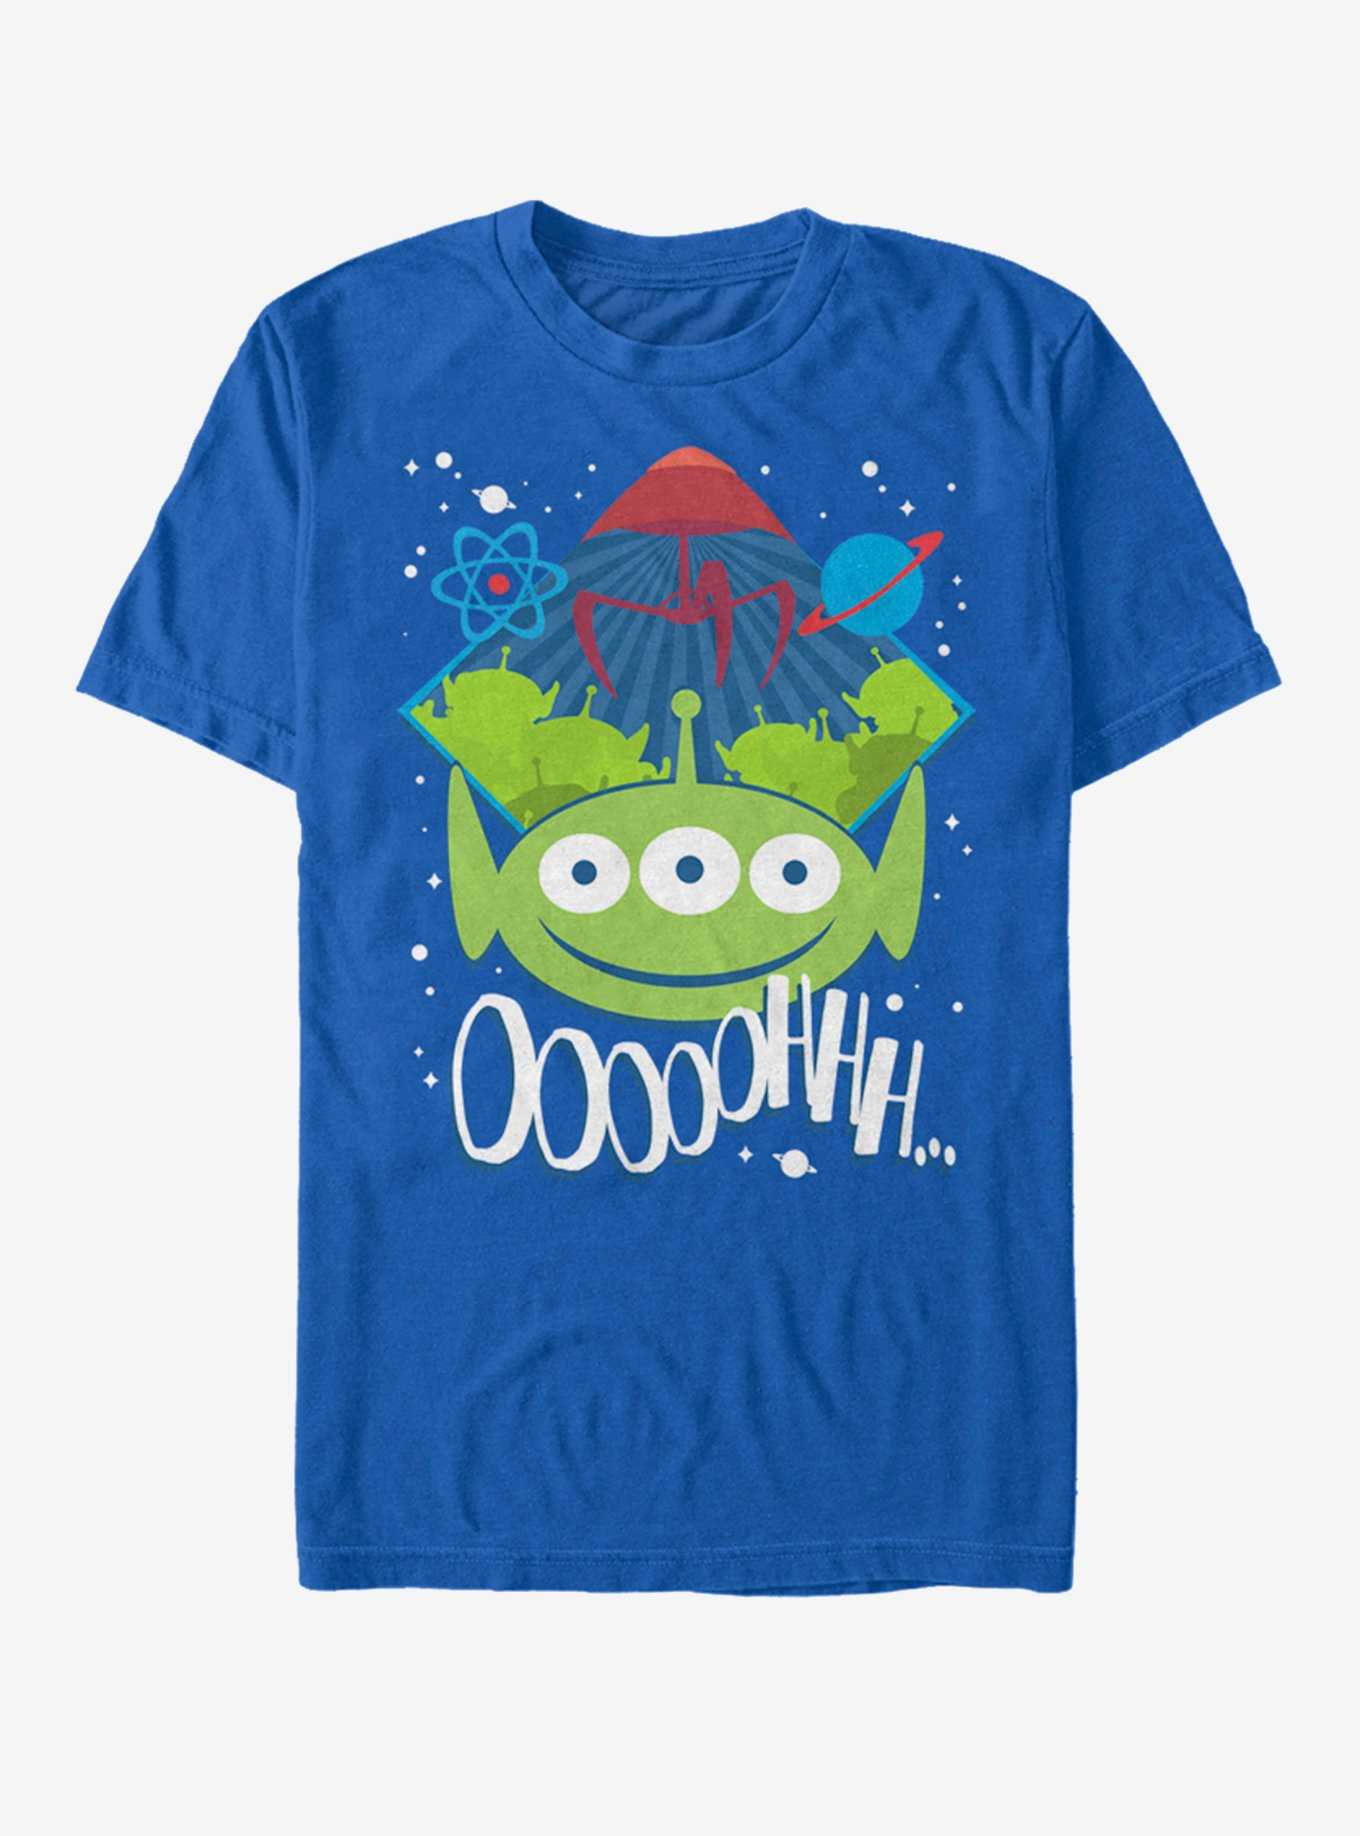 Disney Pixar Toy Story Alien Oooh T-Shirt, , hi-res